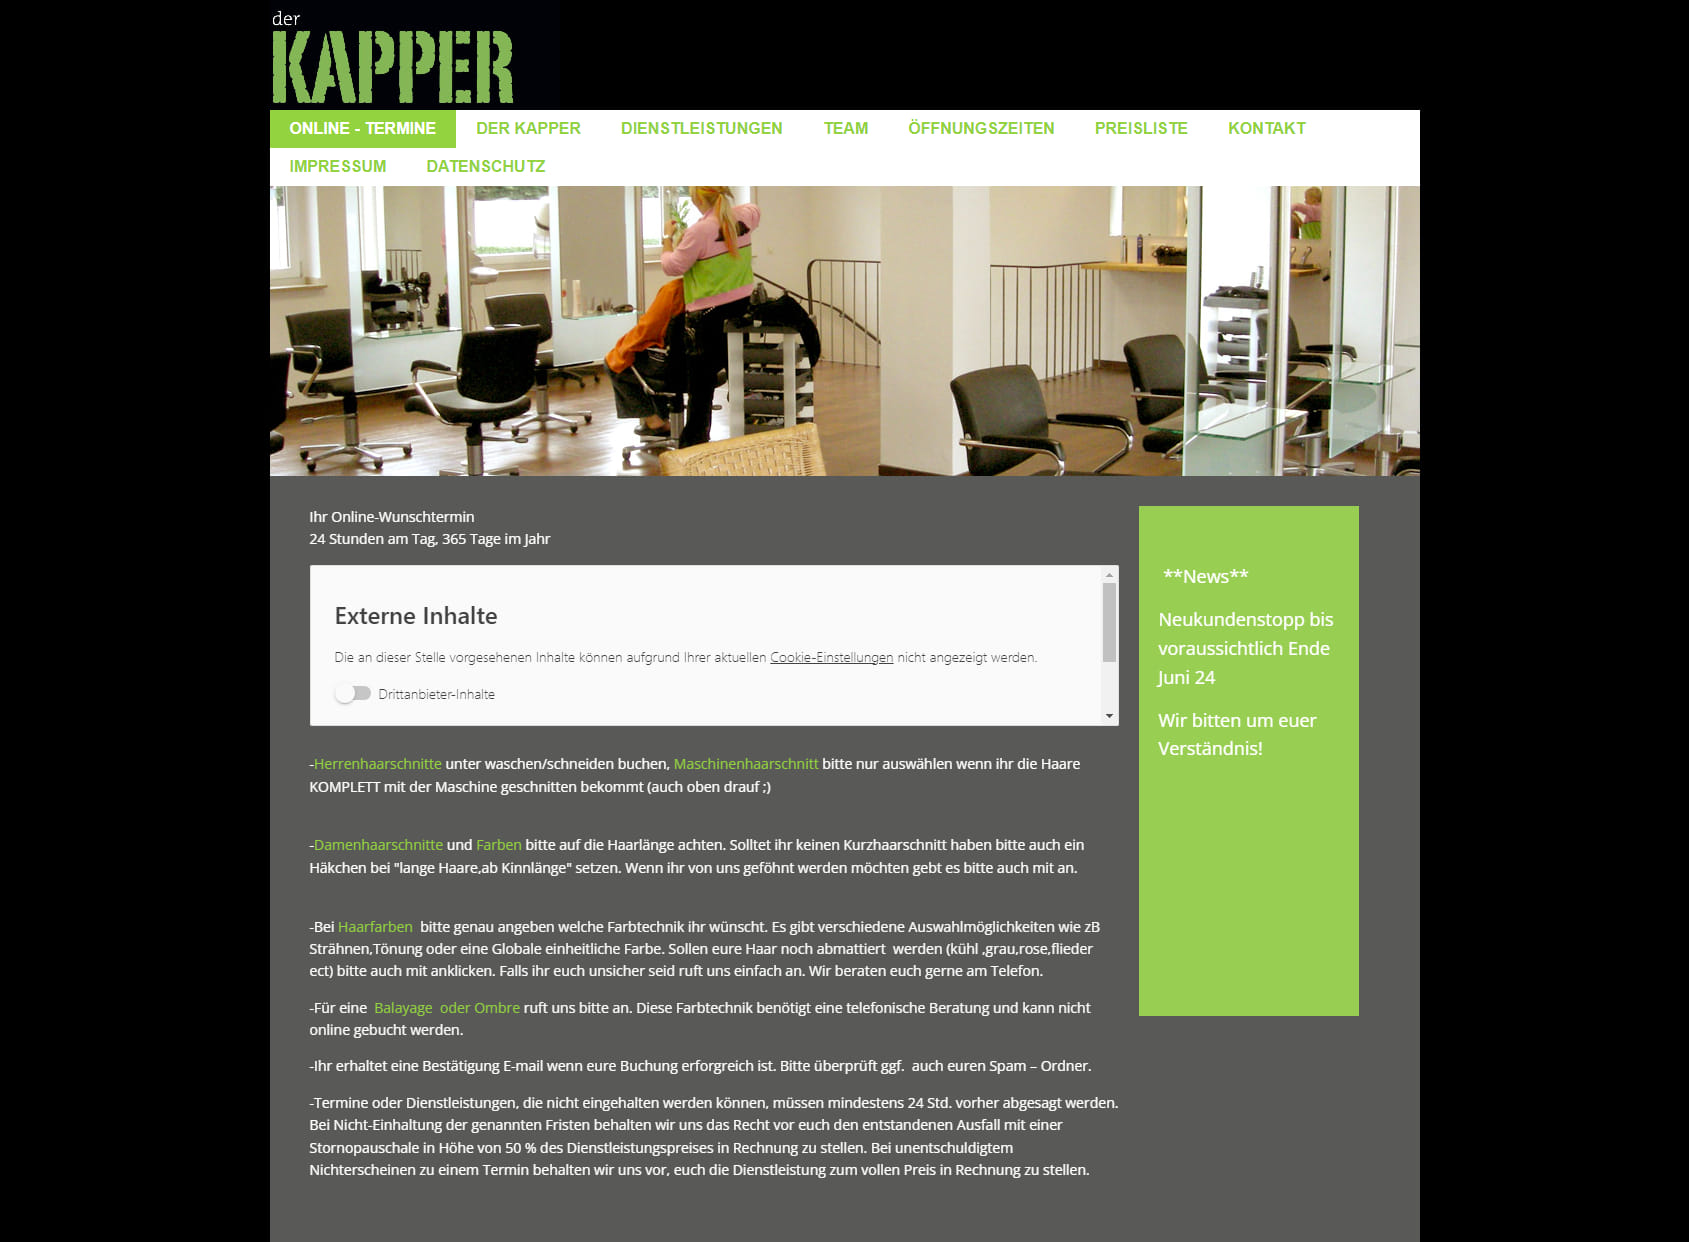 The hair salon Kapper